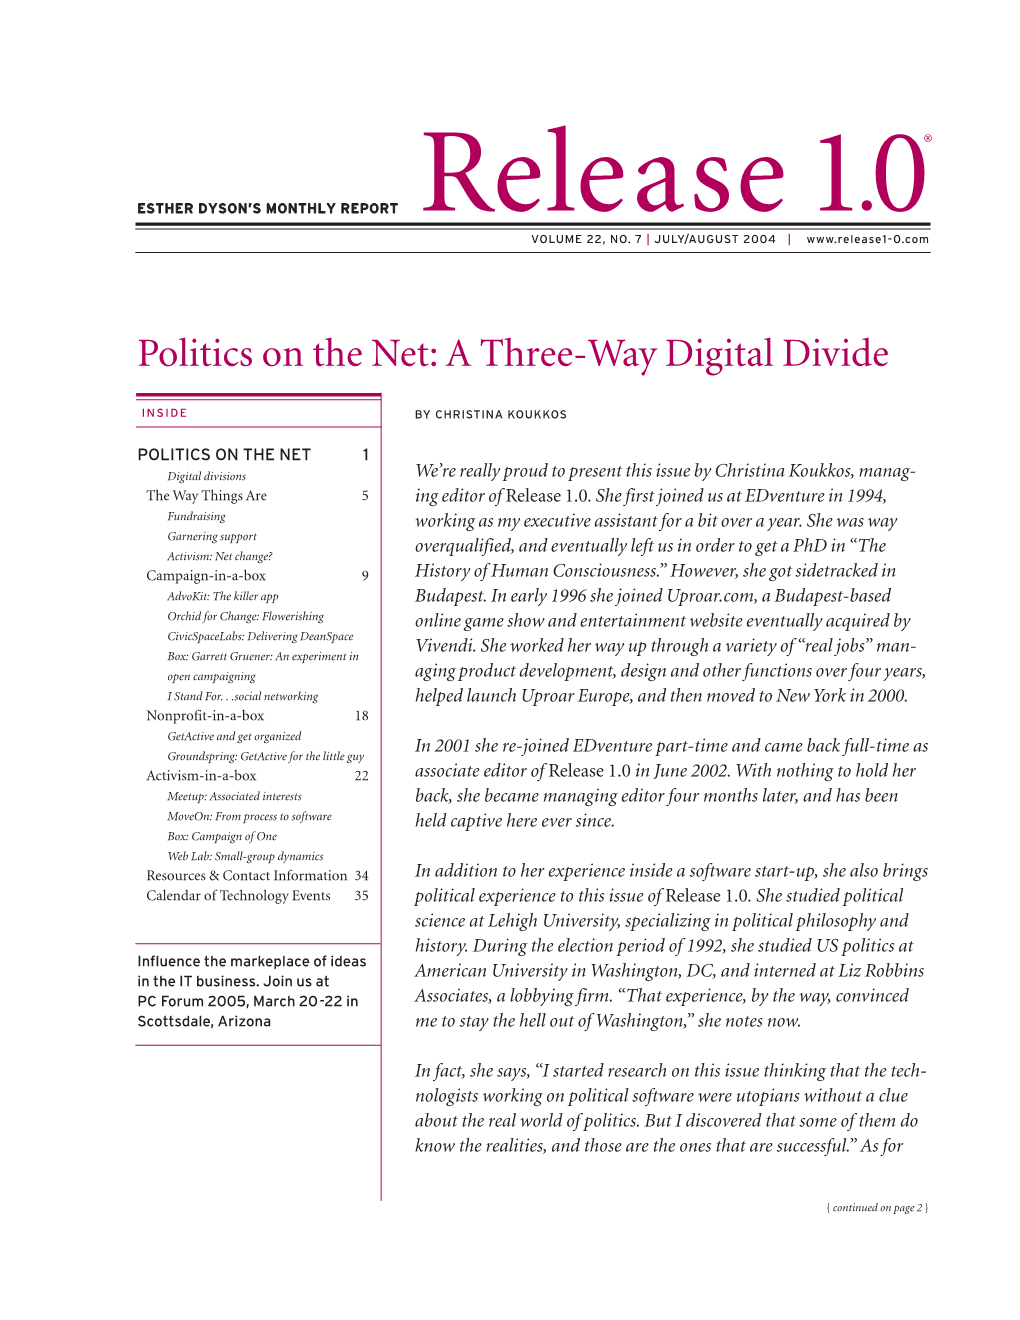 Politics on the Net: a Three-Way Digital Divide